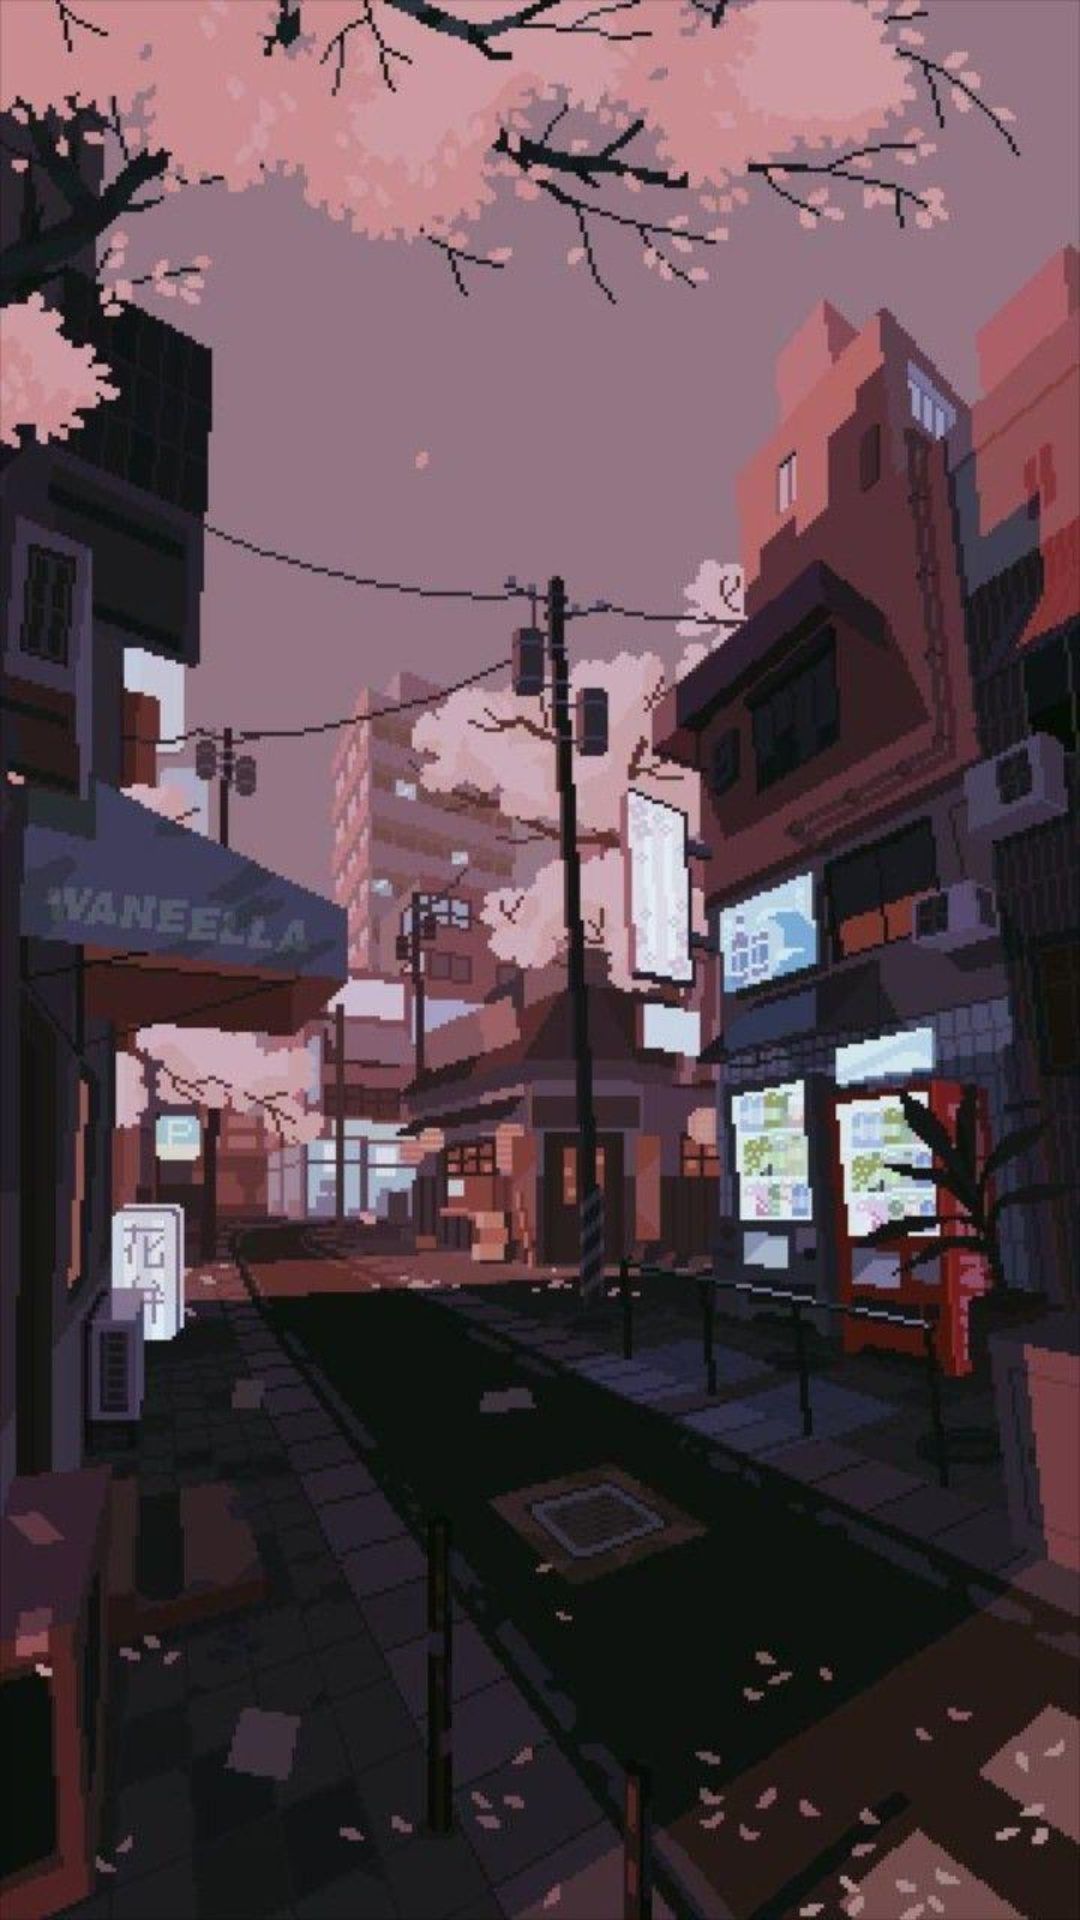 A street scene with pink trees and buildings - Anime, Korean, anime city, road, pixel art, 90s anime, Japan, Seoul, street art, Japanese